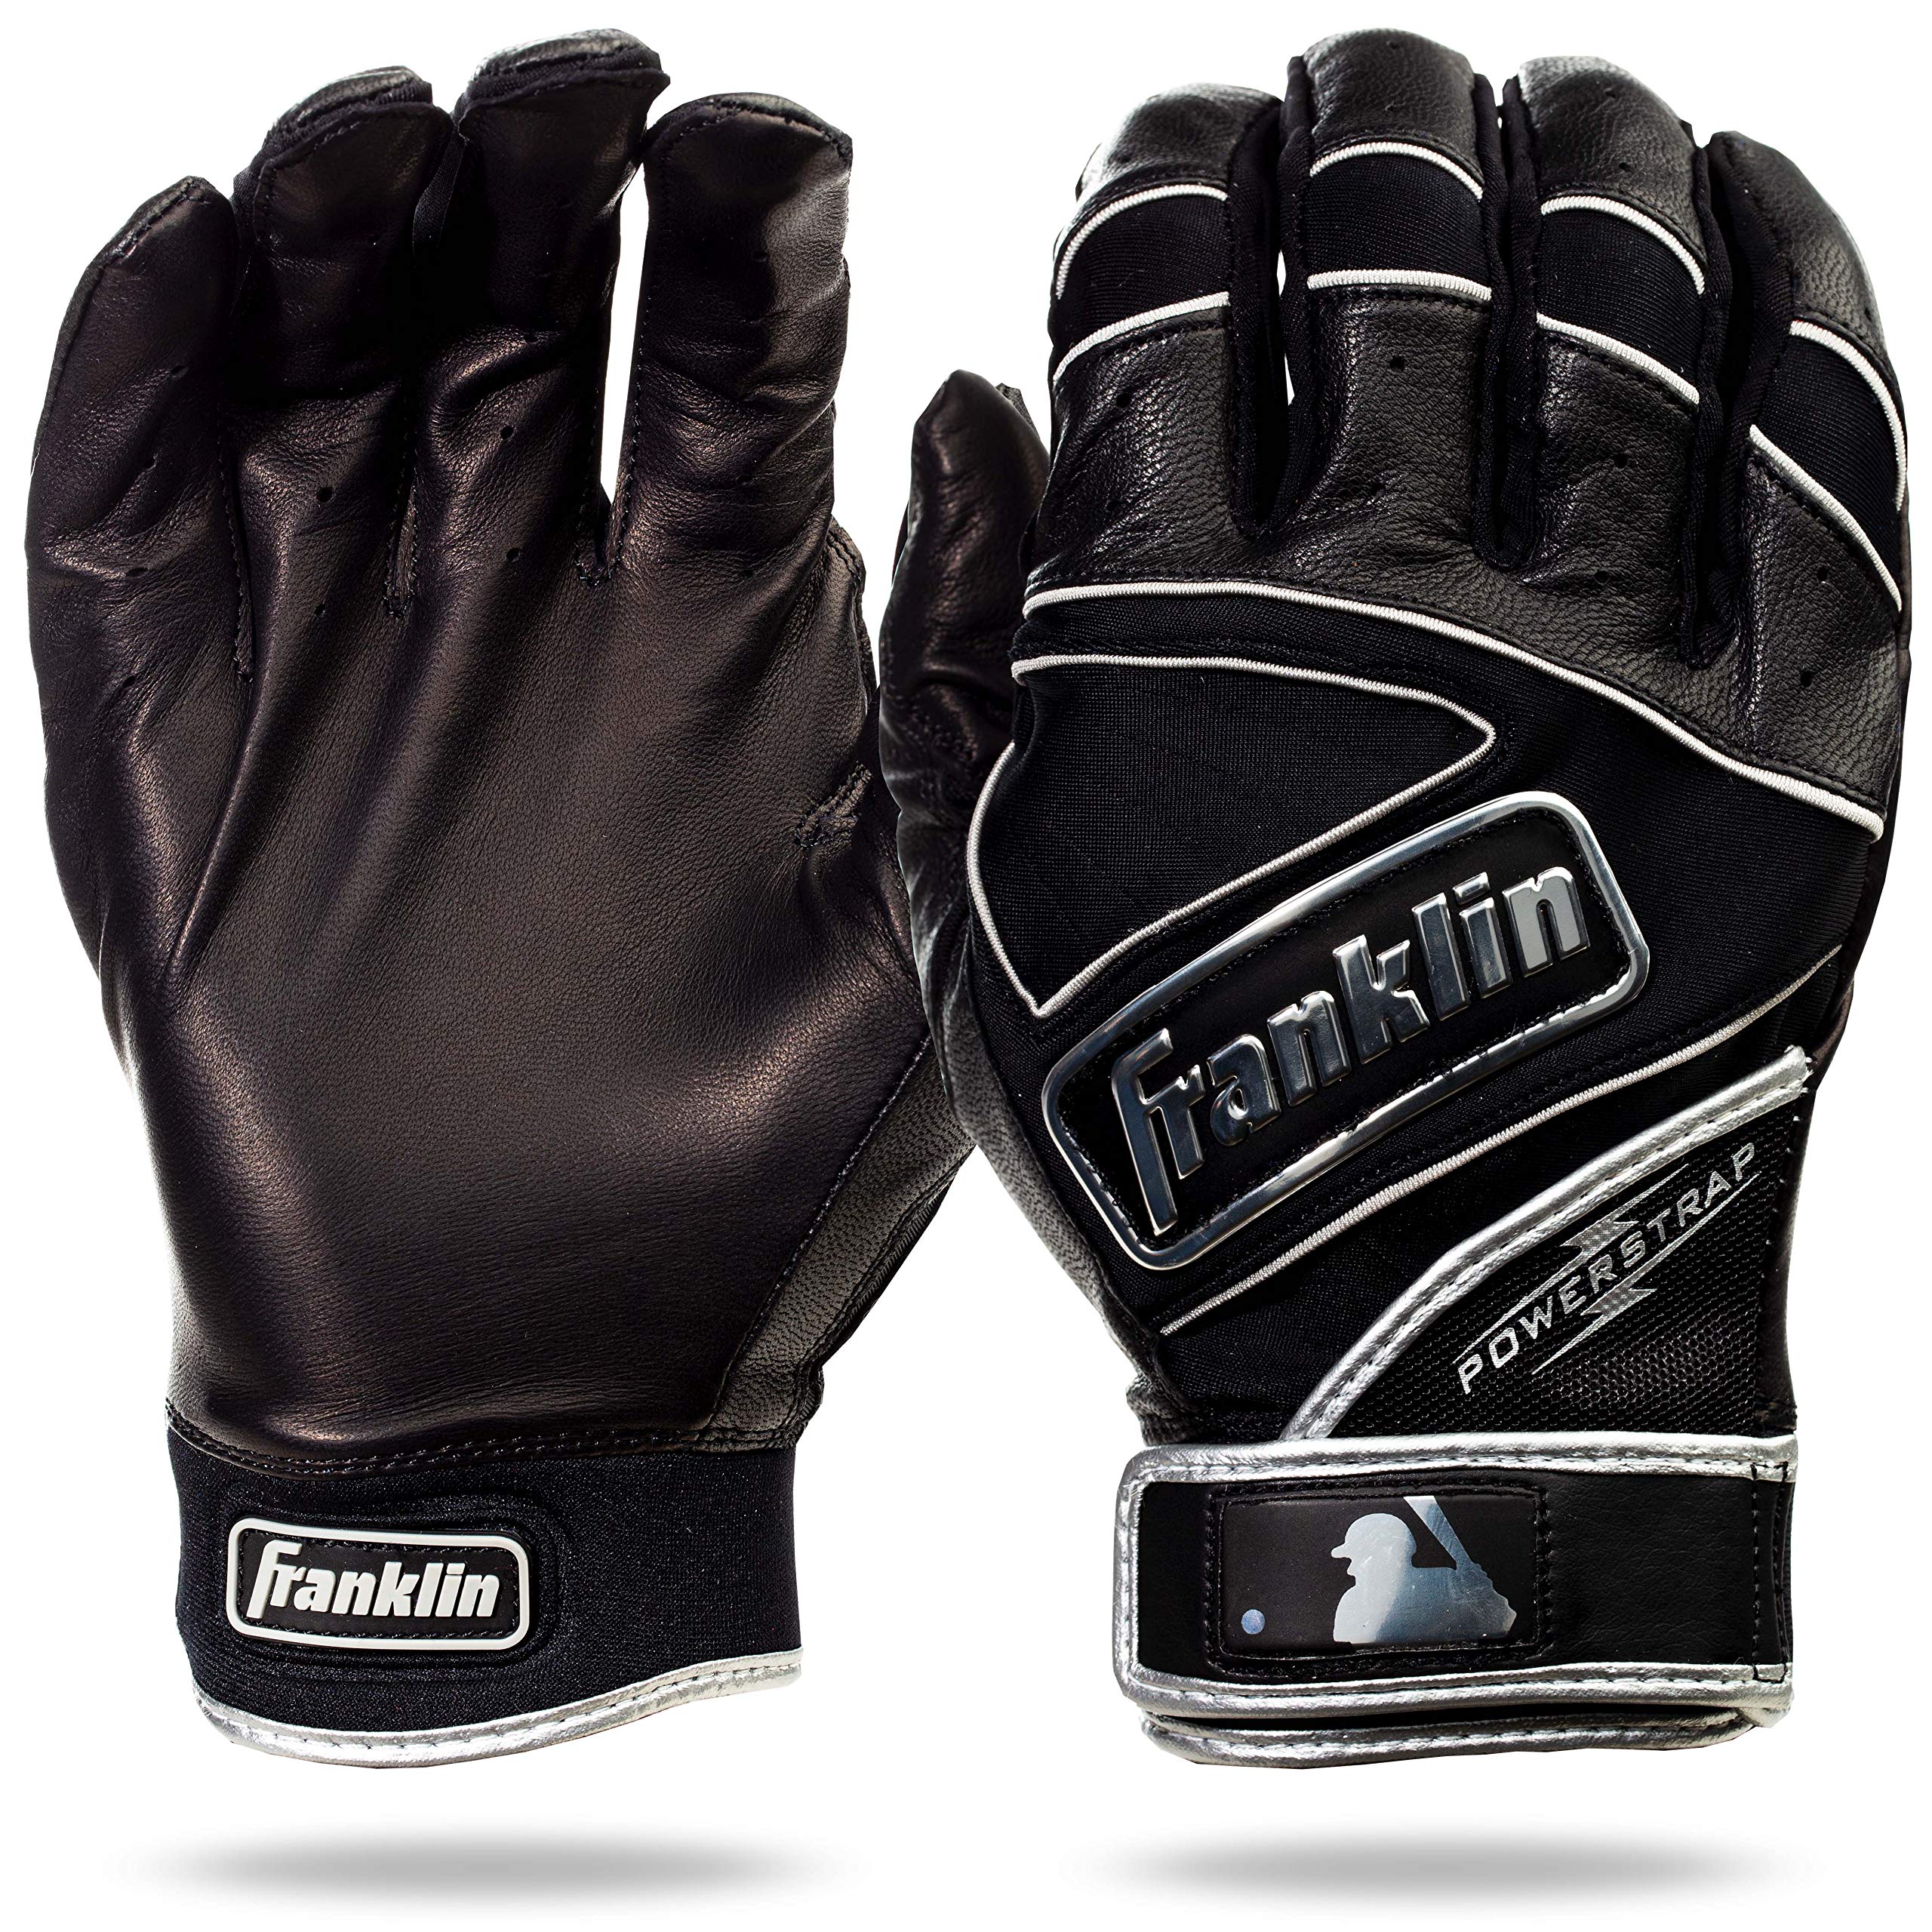 Franklin Sports Mlb Batting Gloves - Powerstrap Chrome Adult Mens Youth Batting Gloves Pair - Baseball Softball Gloves - Black -